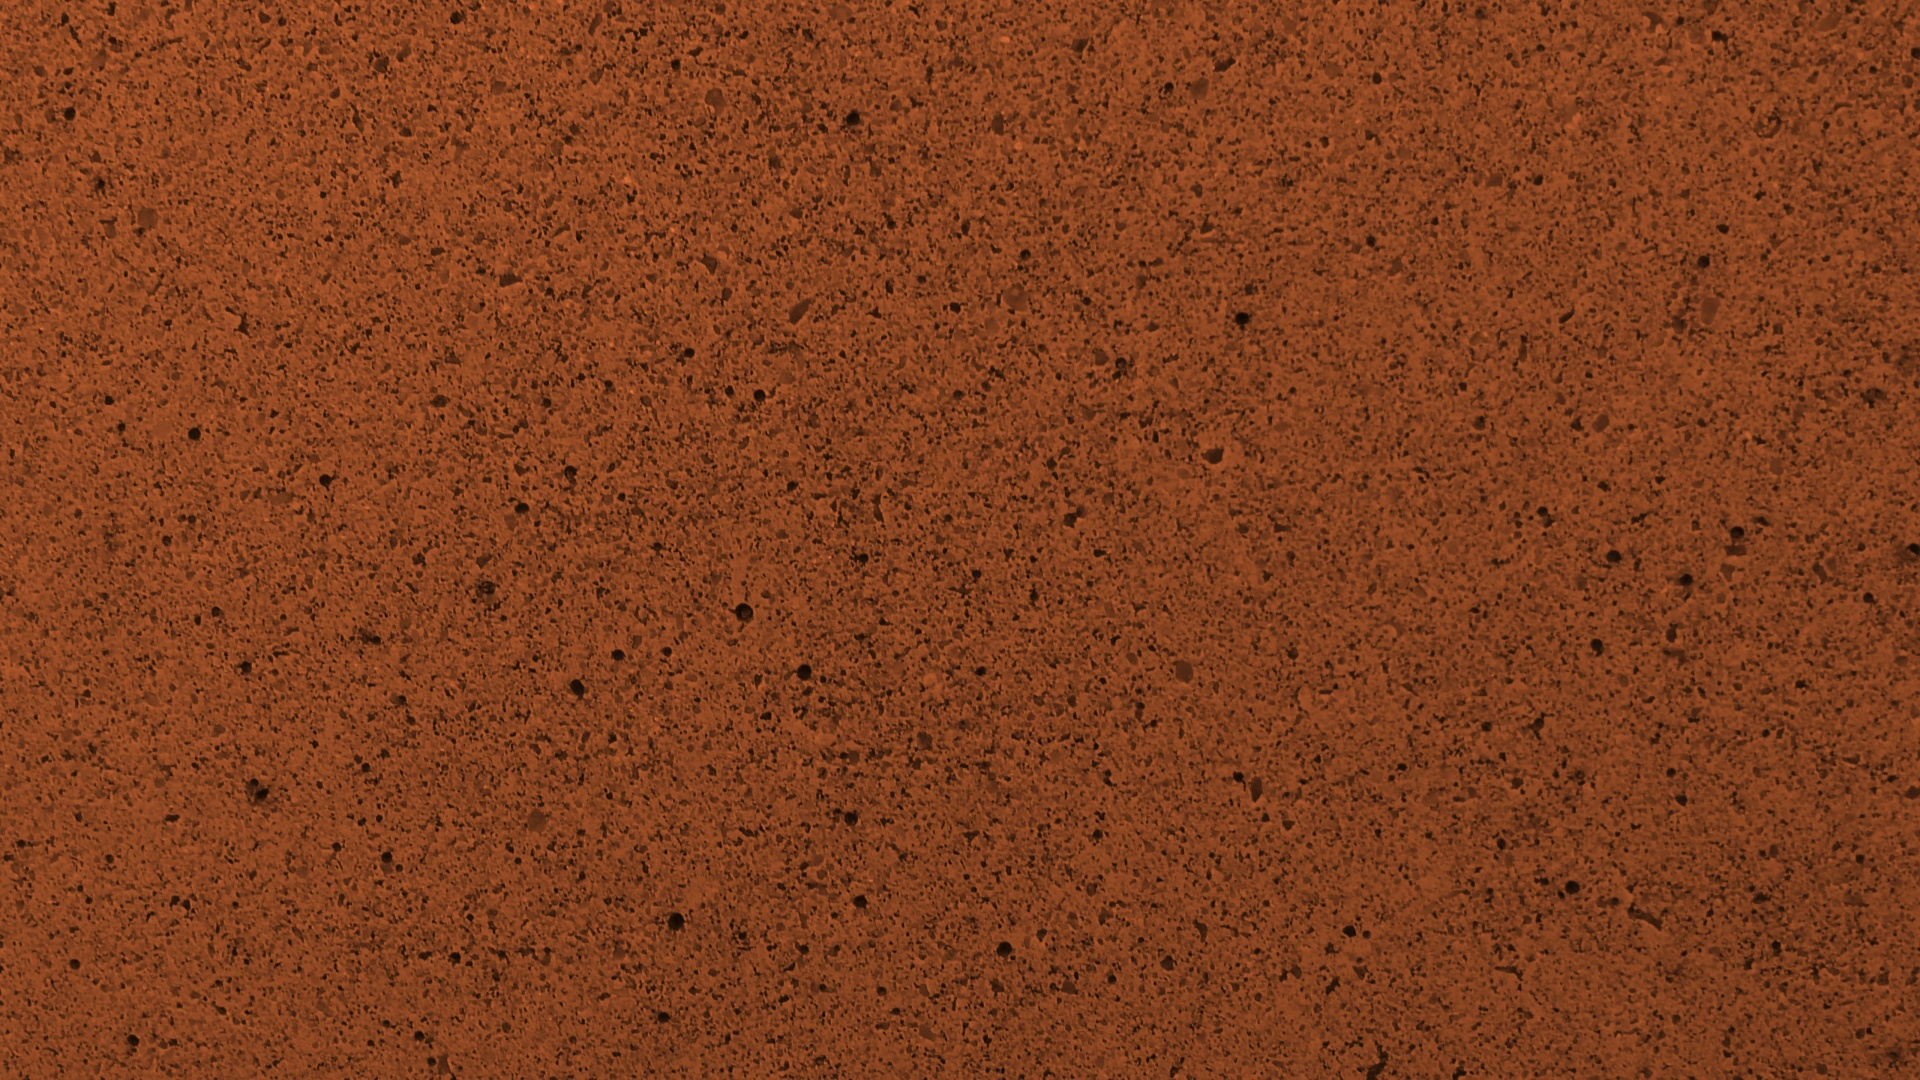 Brown Speckled Background